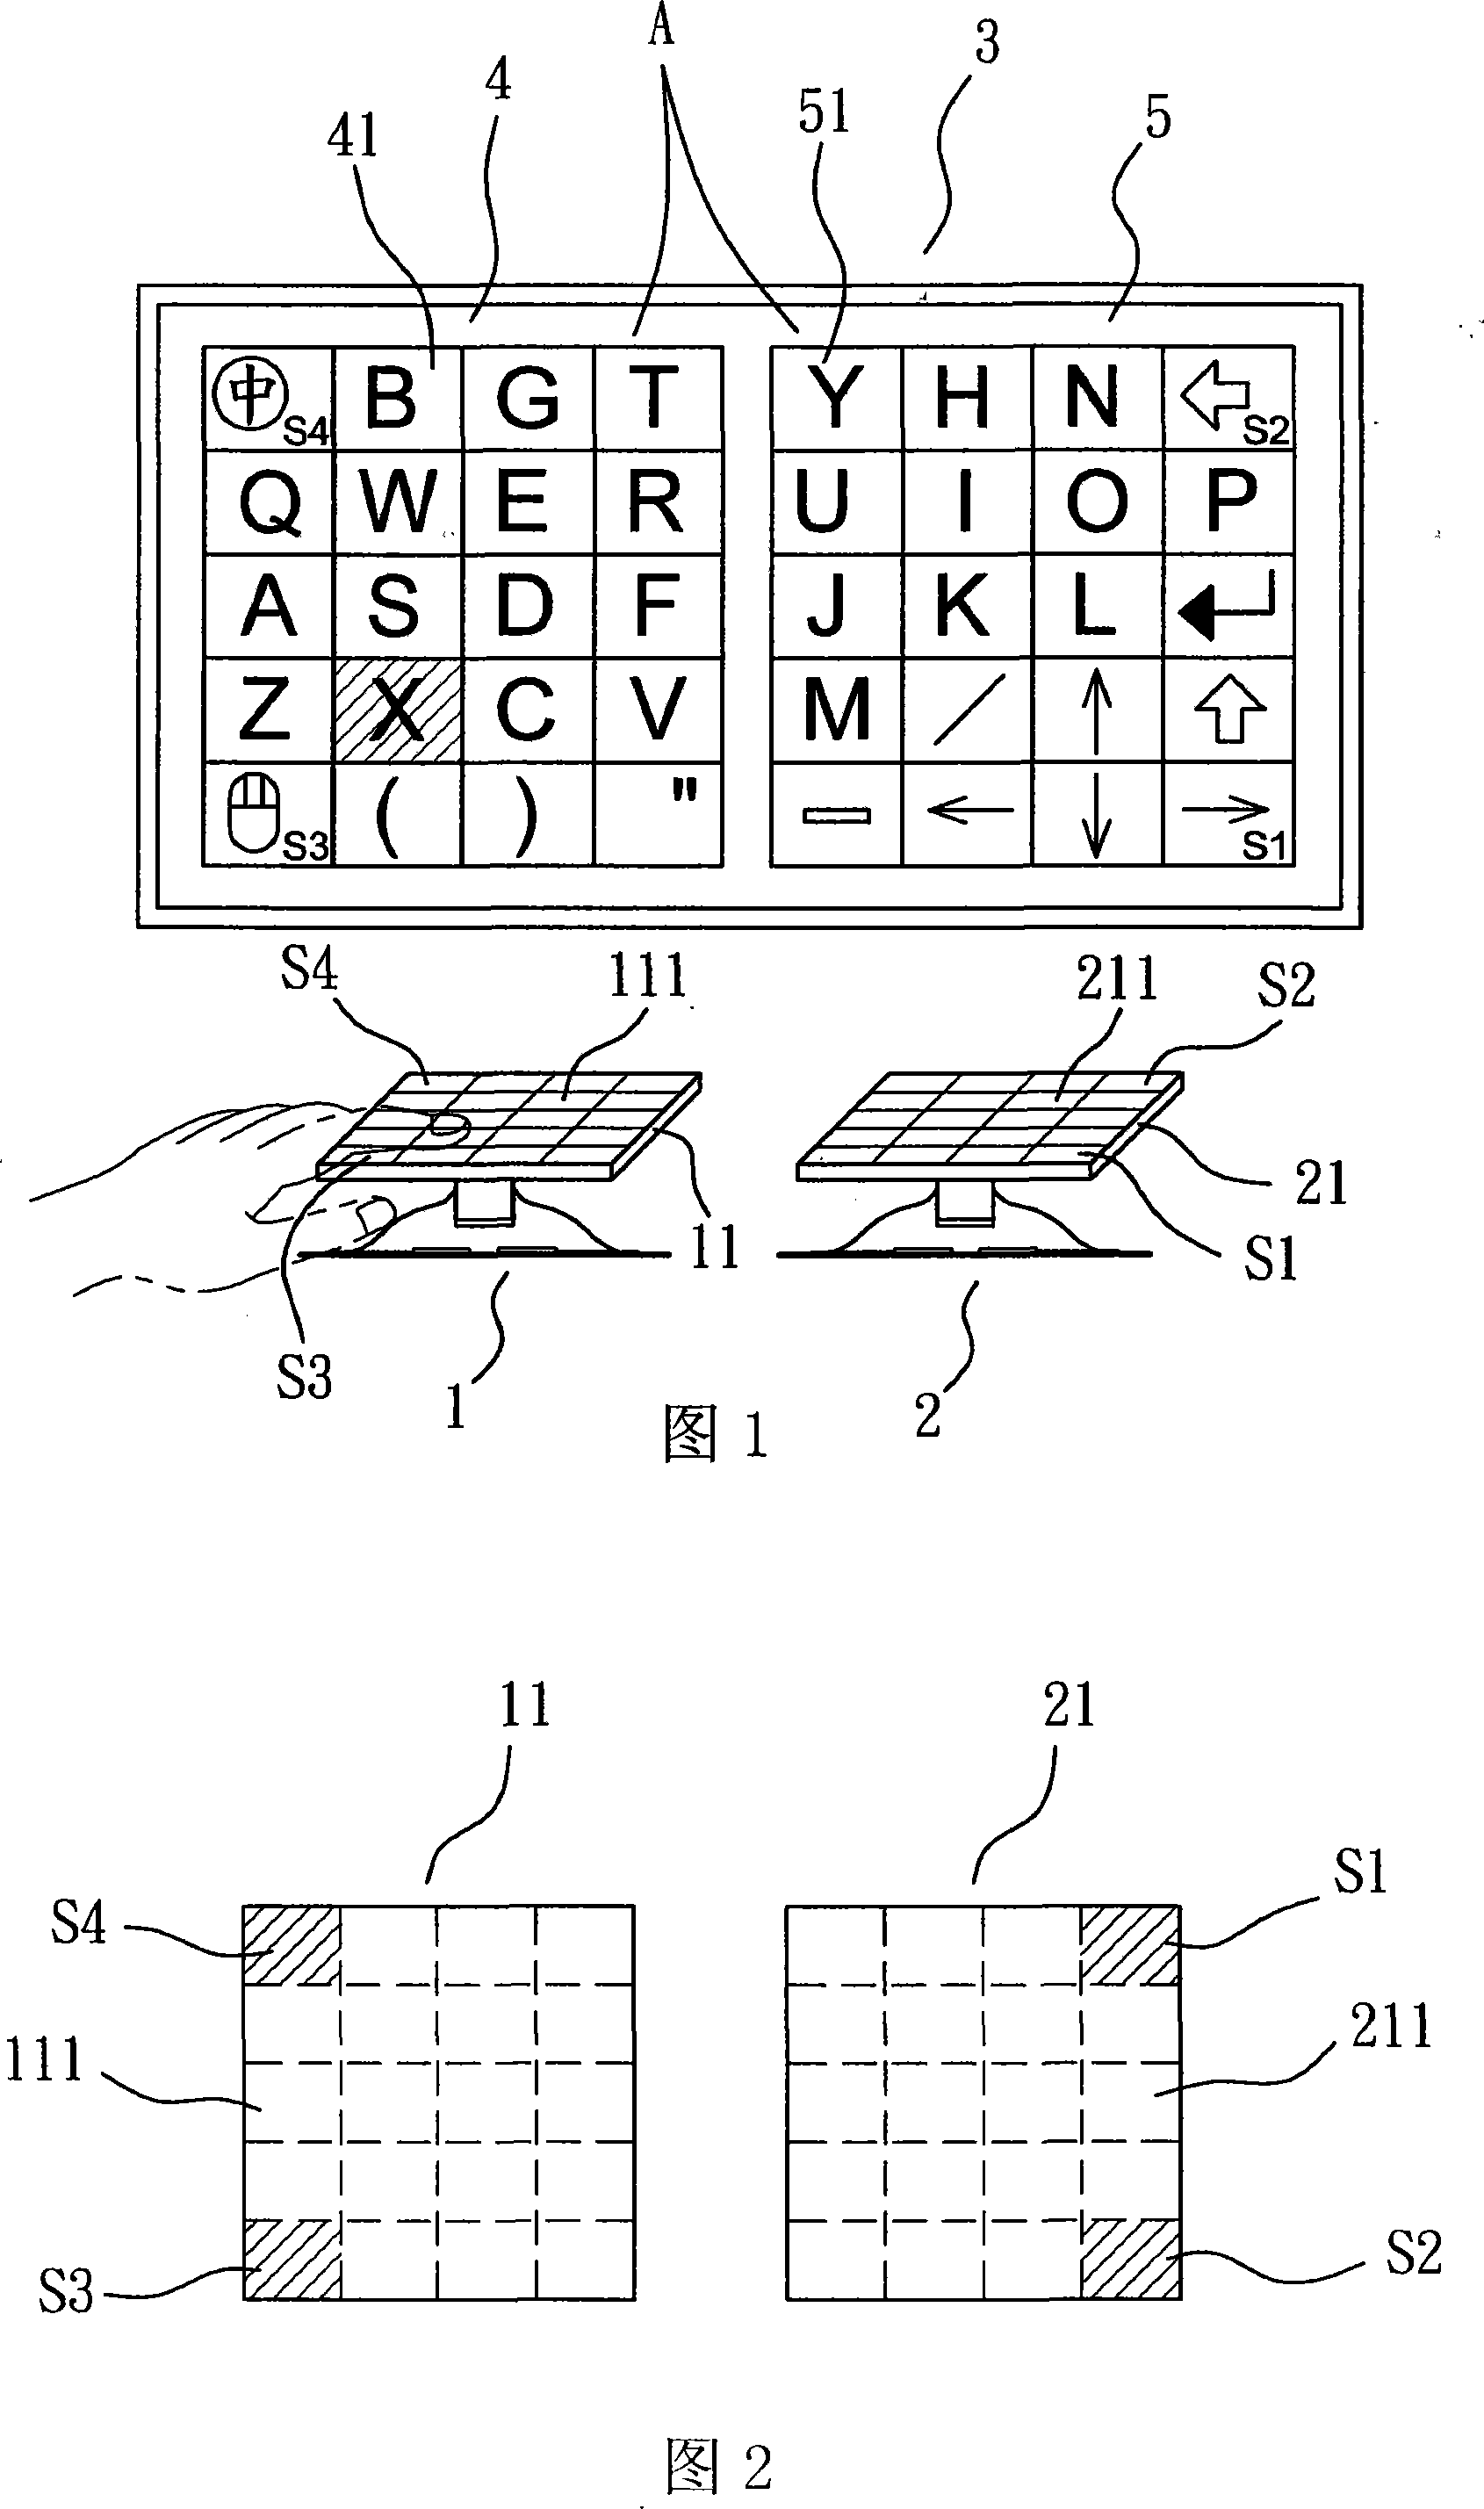 Downsizing keyboard of composite key